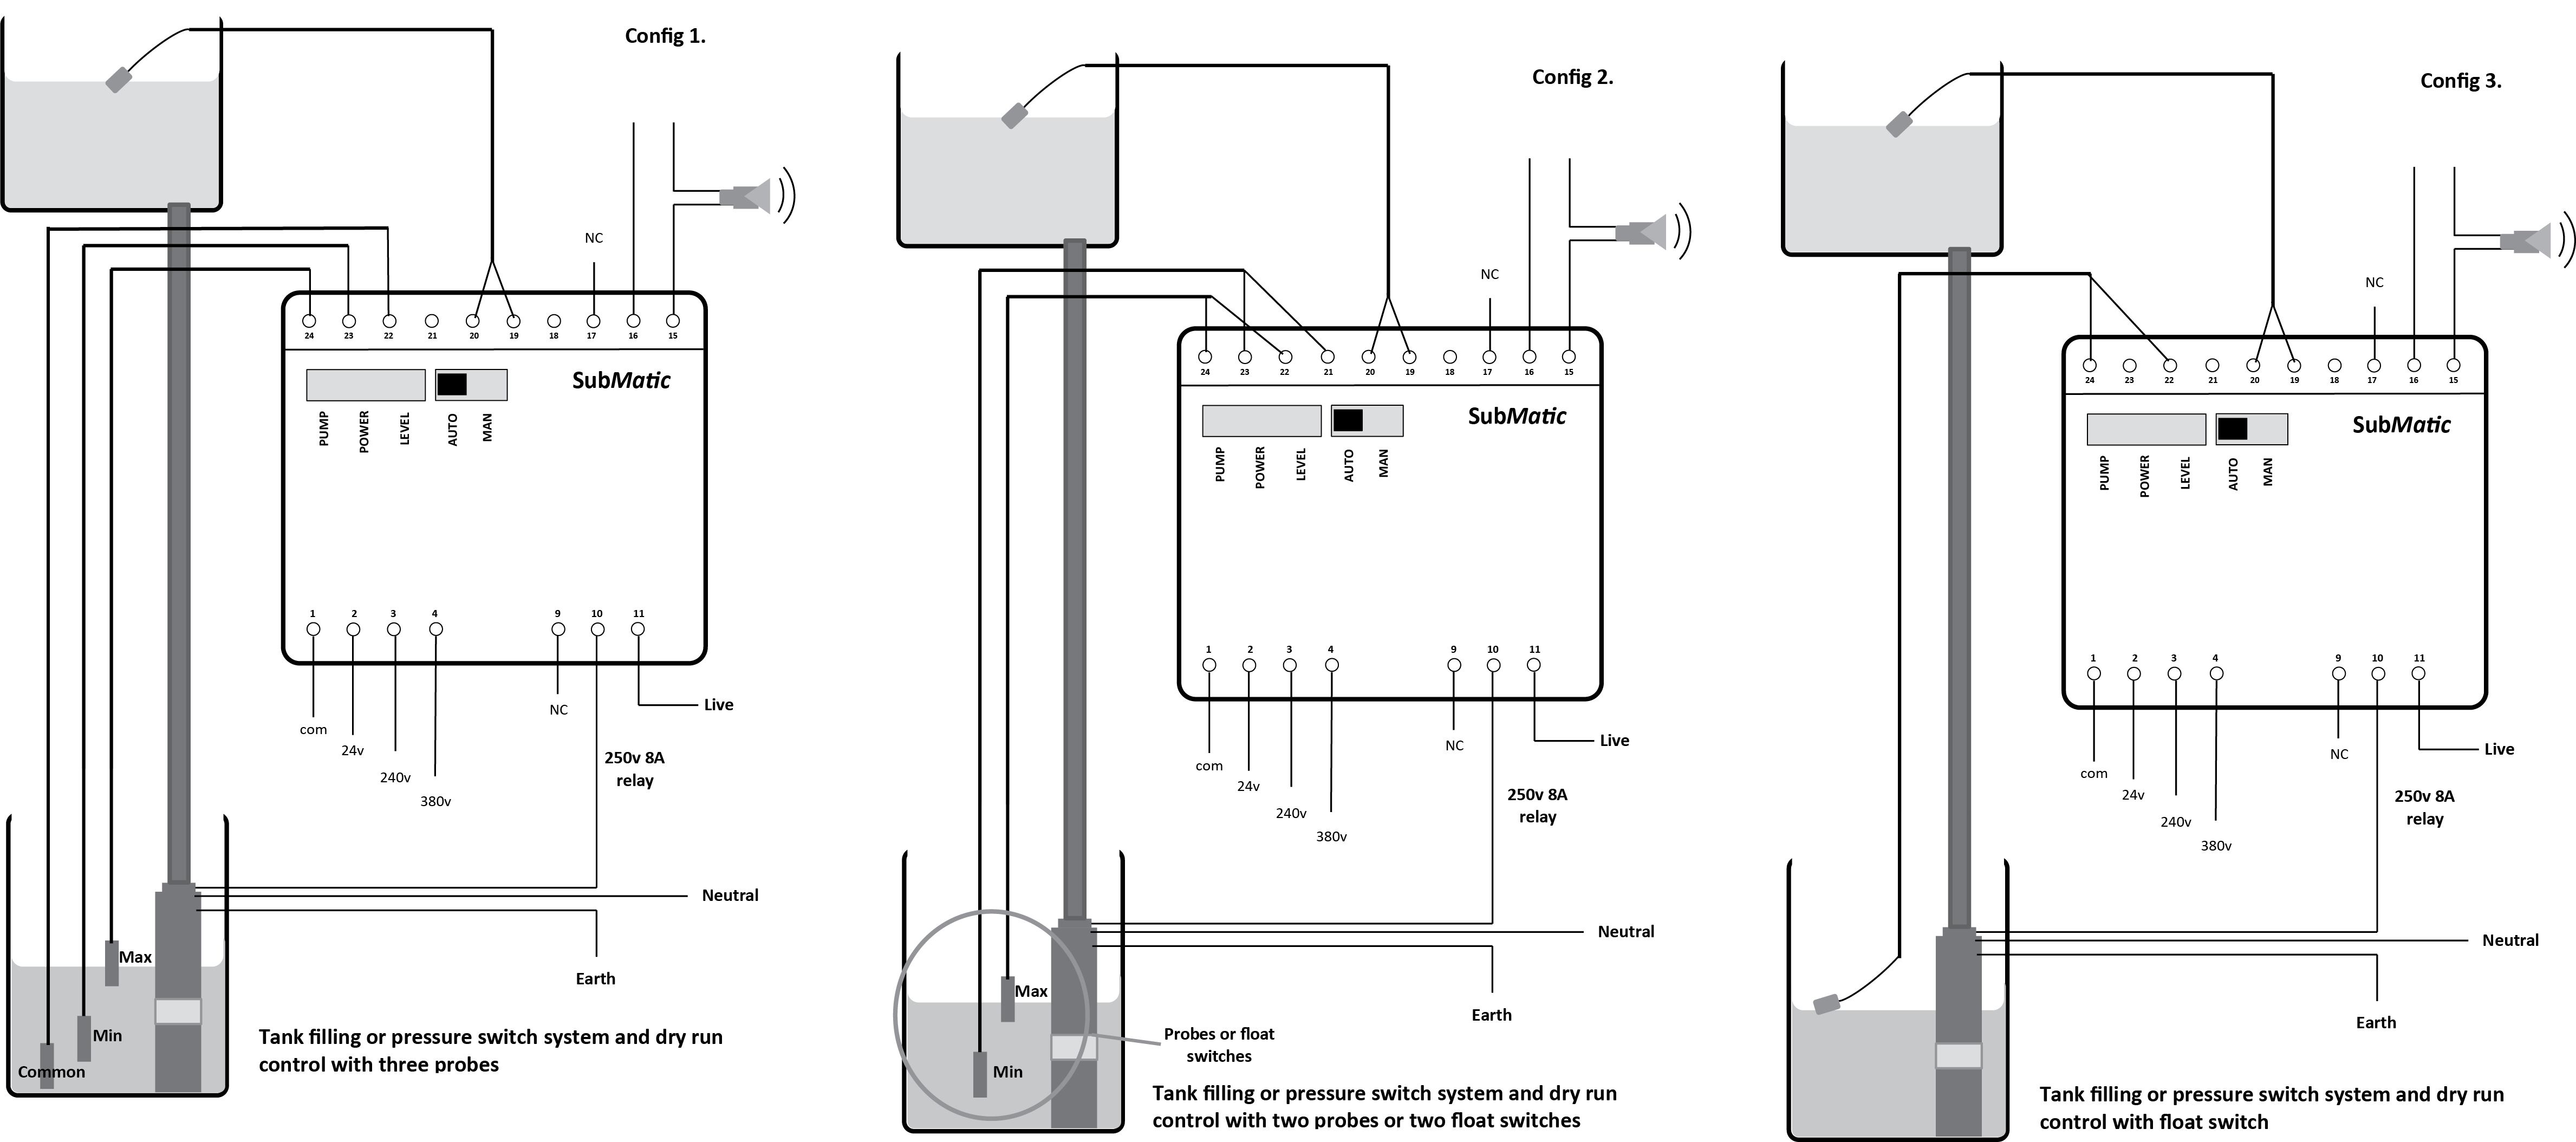 SQ2 wiring diagram